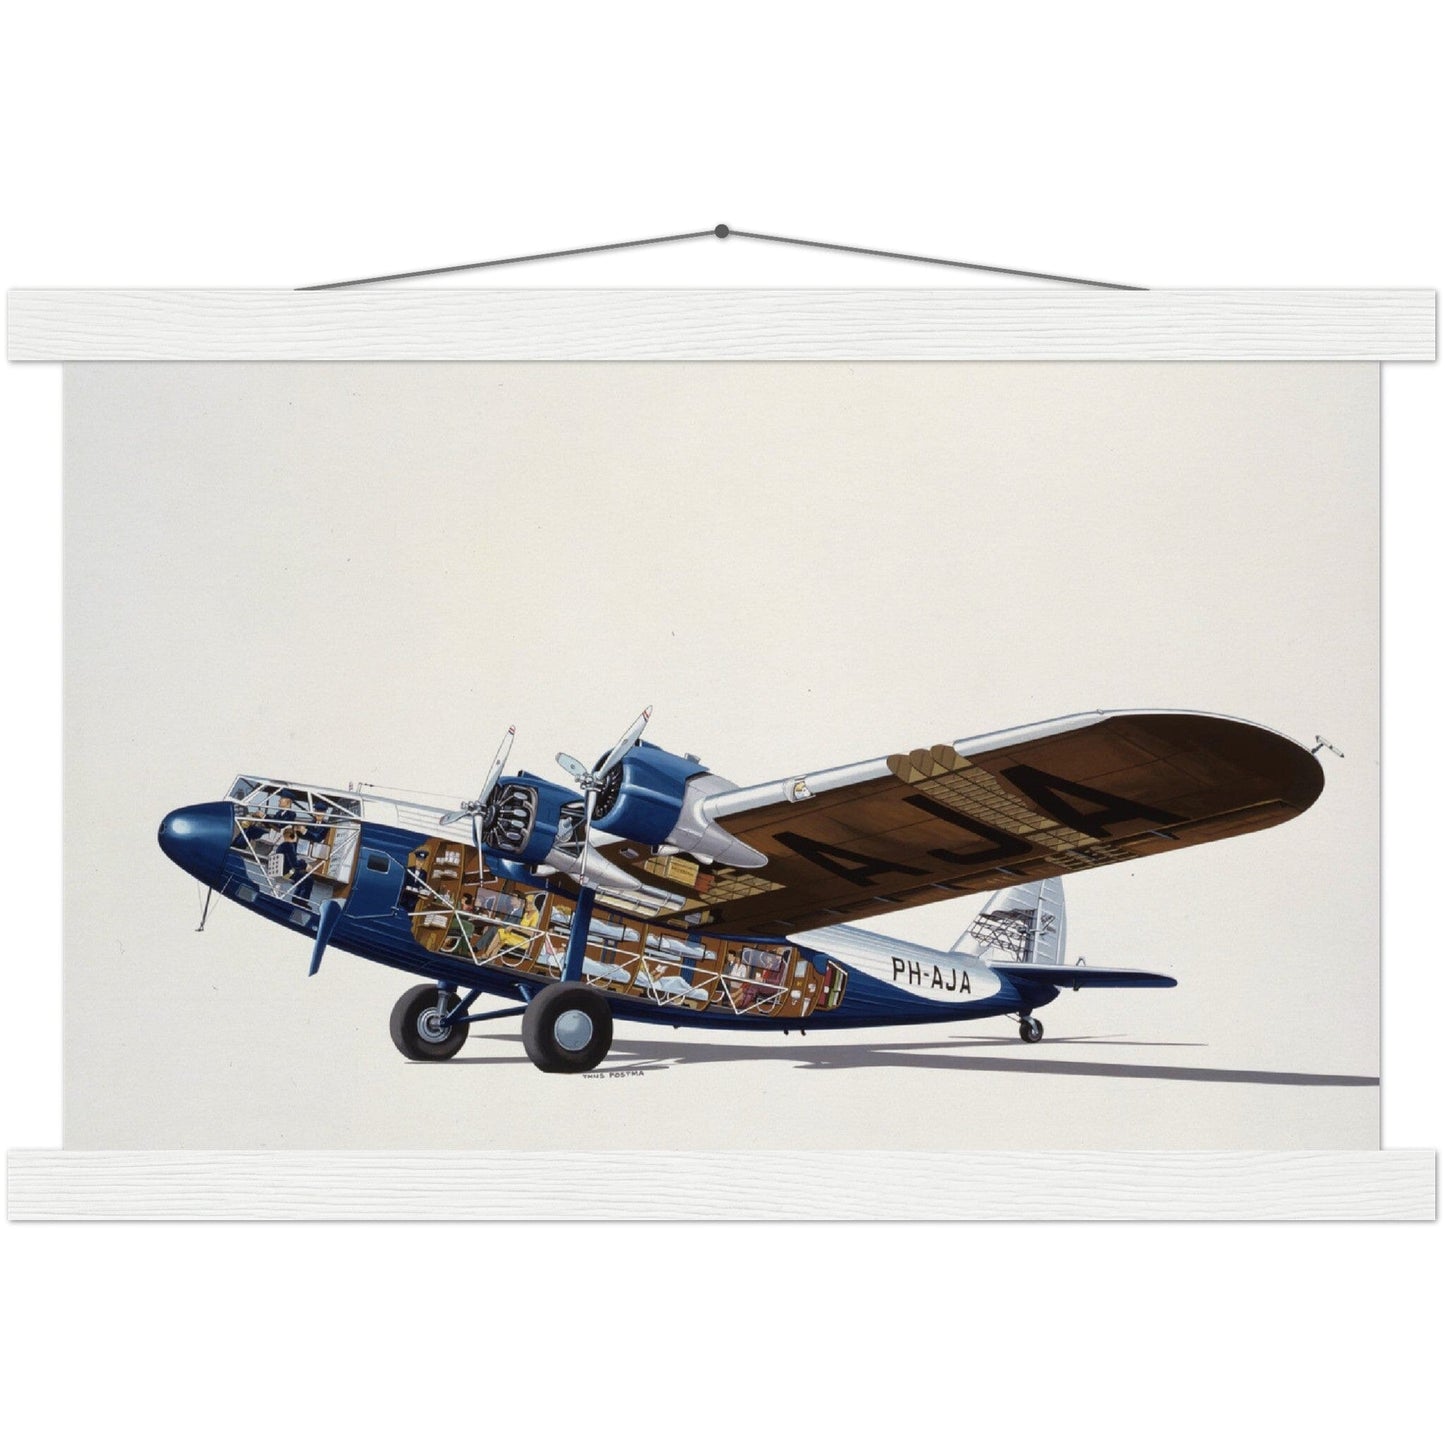 Thijs Postma - Poster - Fokker F.XXXVI Cutaway - Hanger Poster - Hanger TP Aviation Art 28x43 cm / XL (11x17″) white 